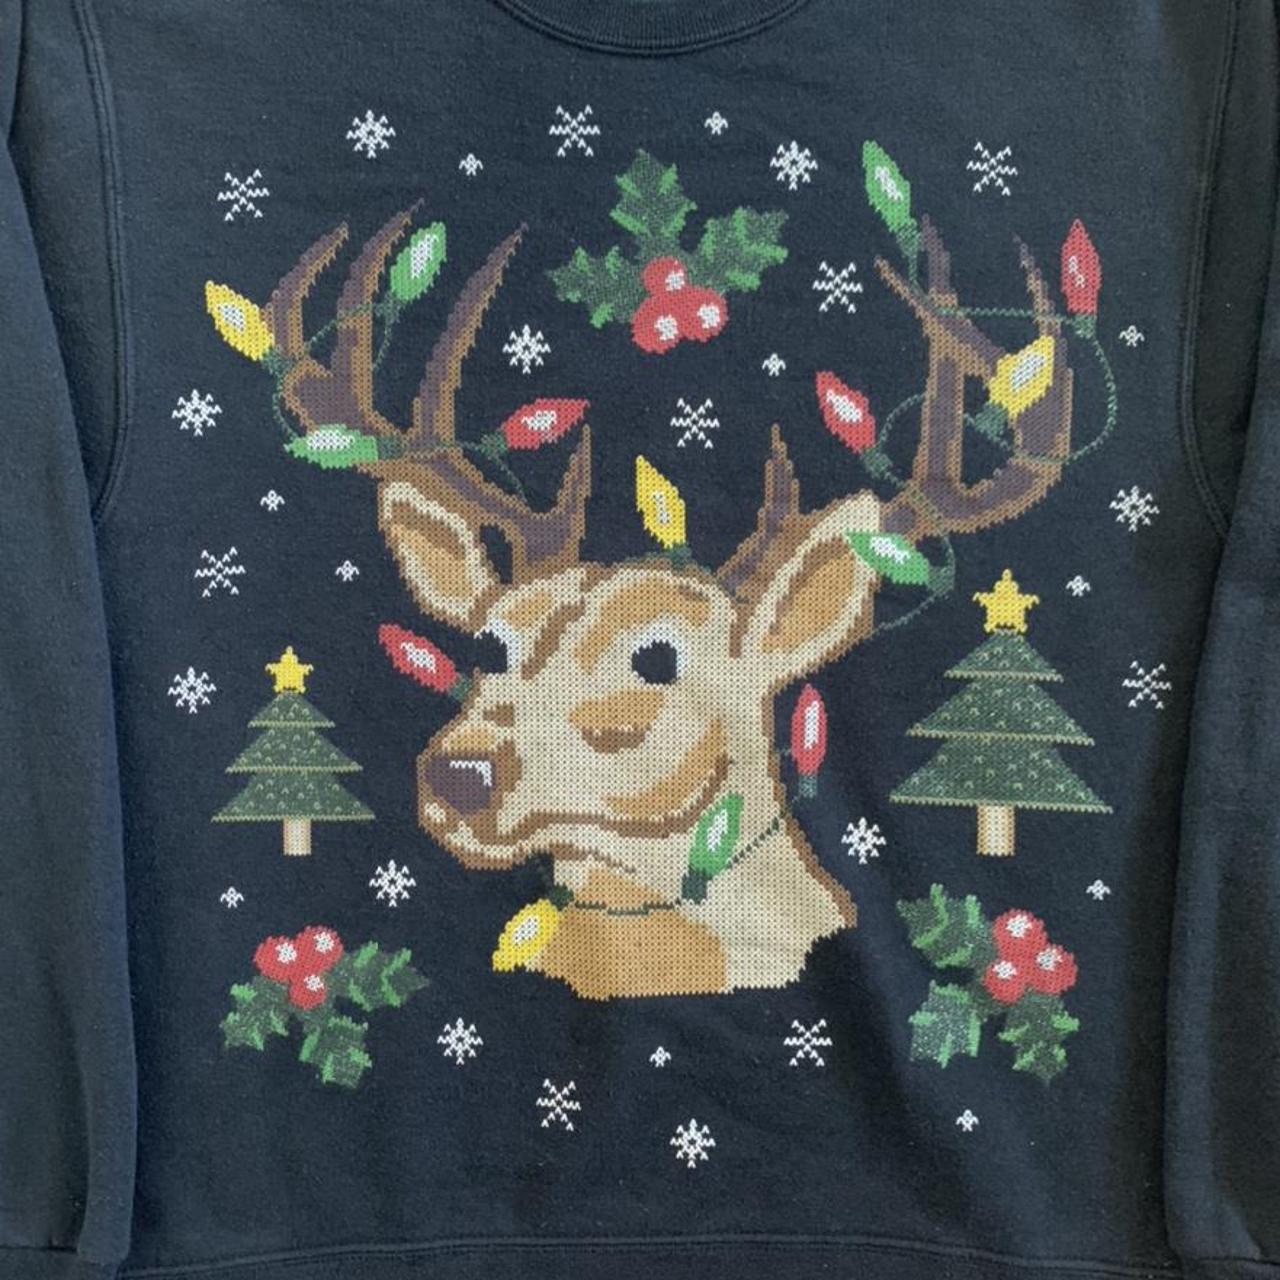 Product Image 3 - Christmas crew neck graphic sweatshirt!

Black